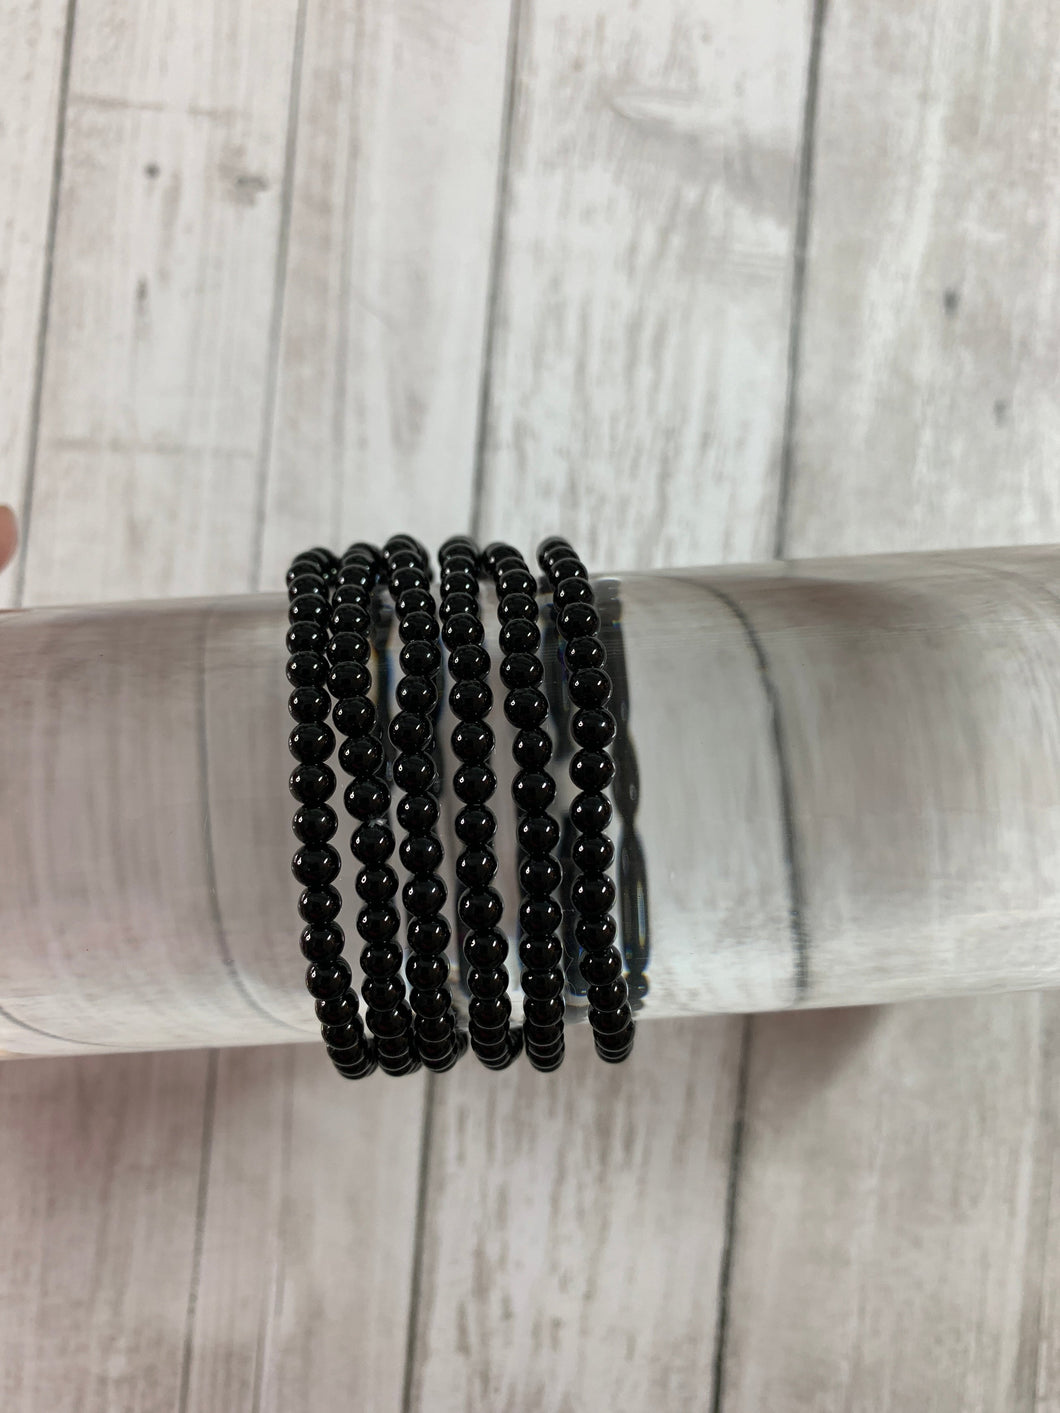 Black Onyx Bracelet 4mm